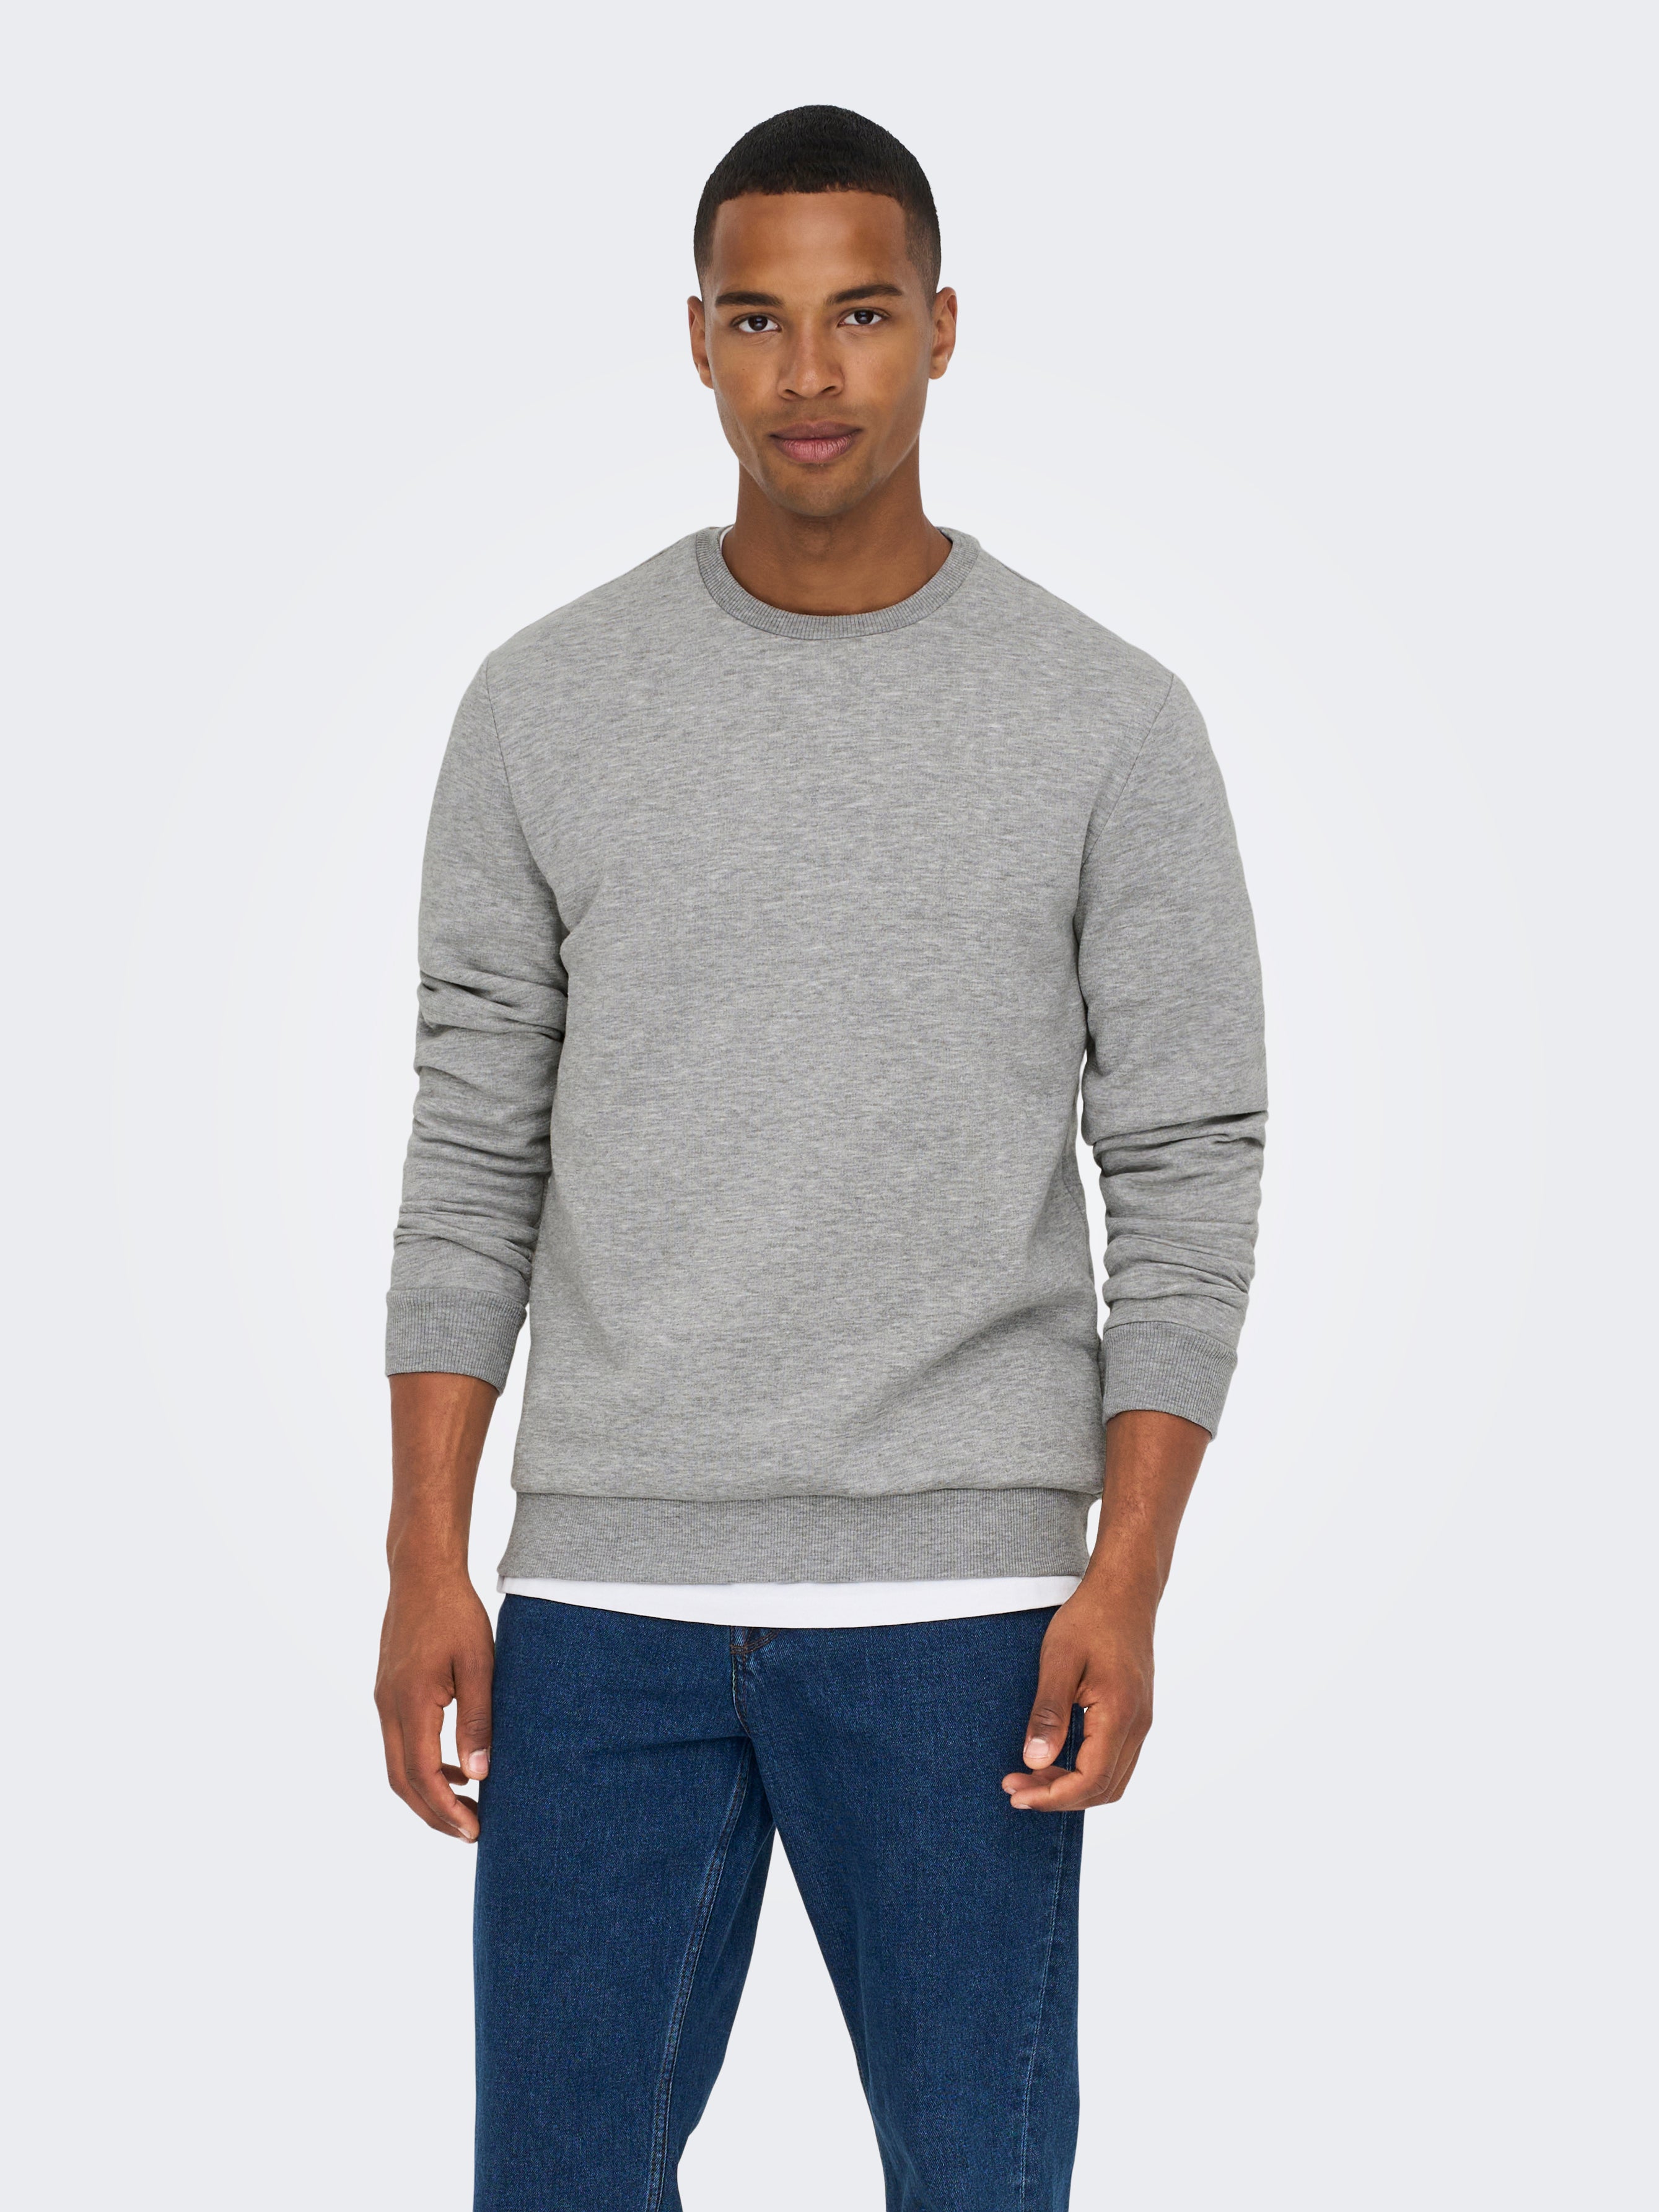 Grau L ONLY & SONS Pullover Rabatt 57 % HERREN Pullovers & Sweatshirts Casual 